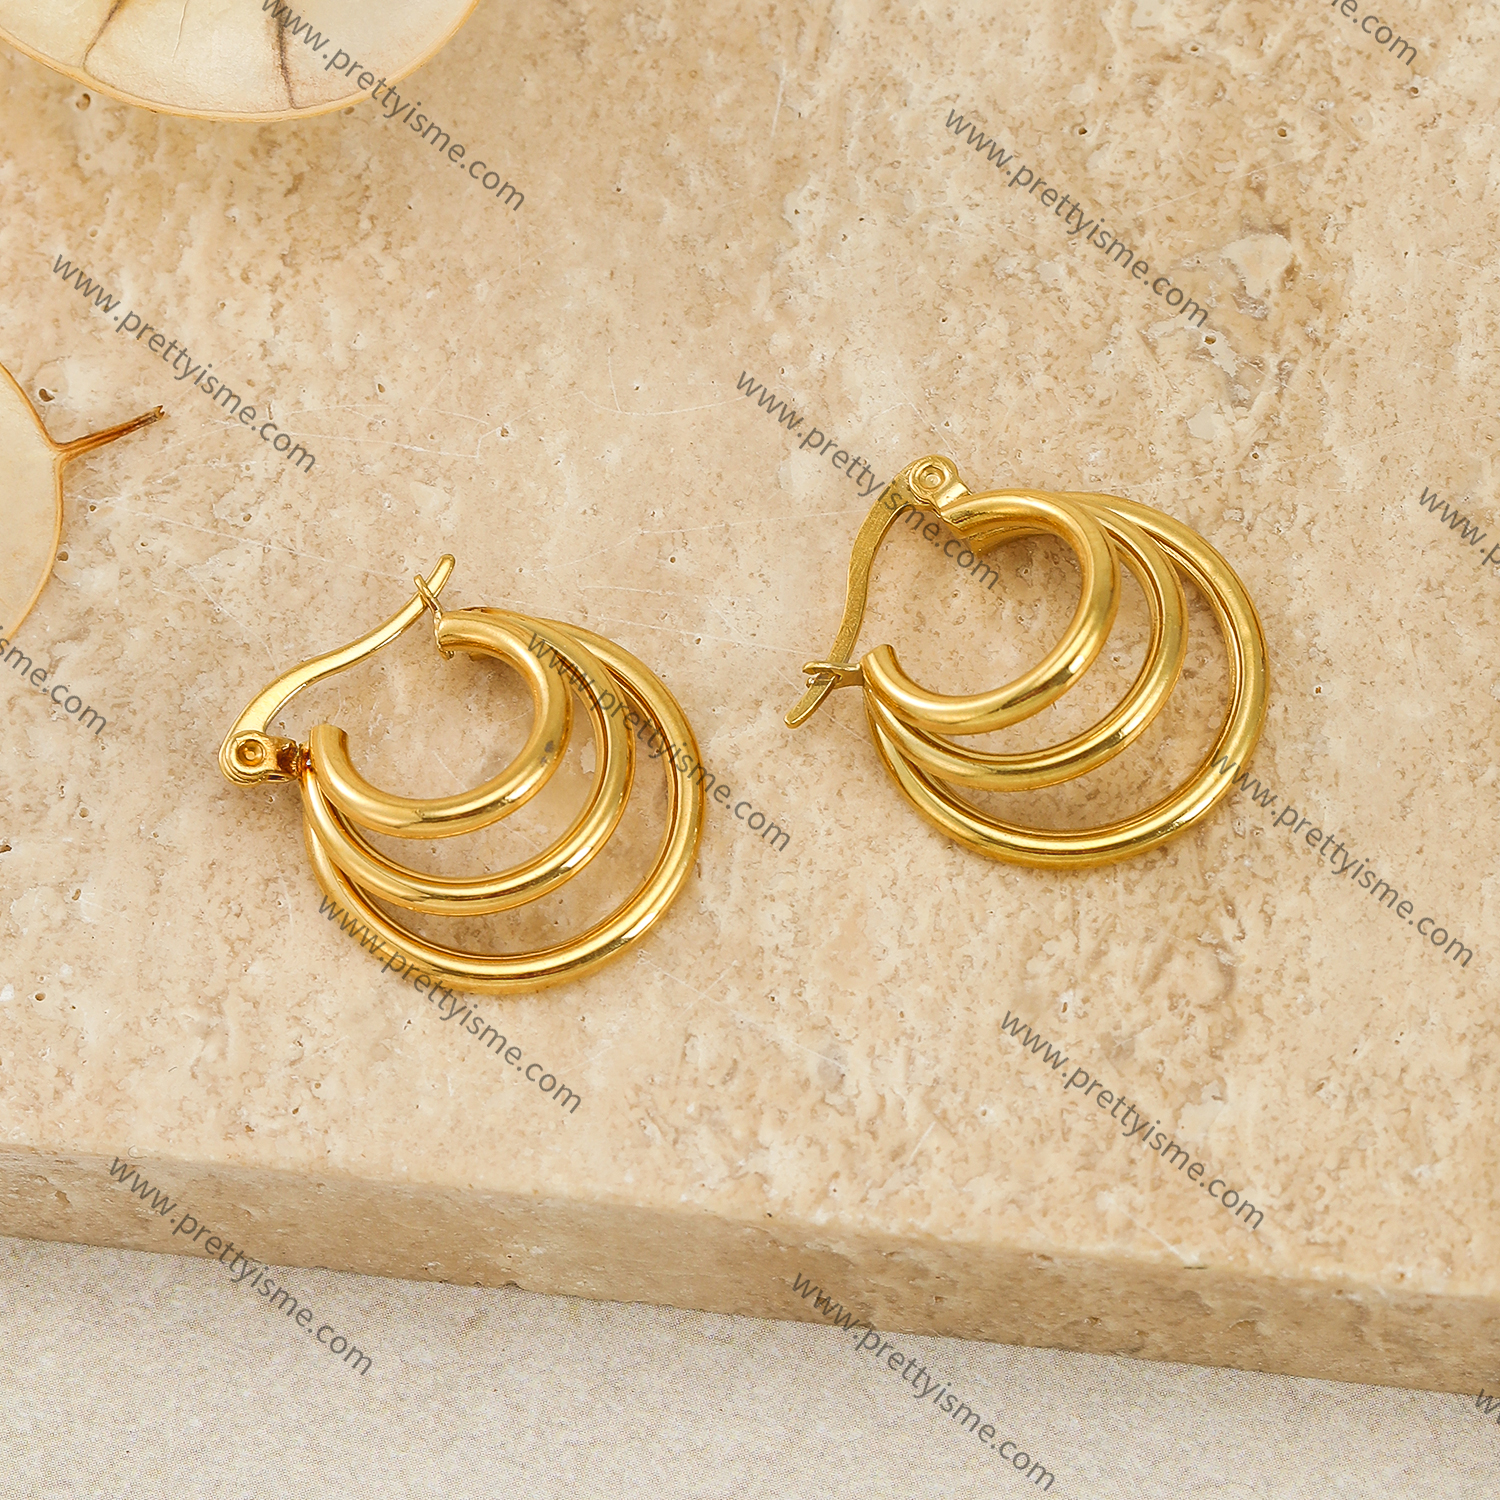 Unique Design Stainless Steel Earrings Gold Plated 18K Earrings.webp